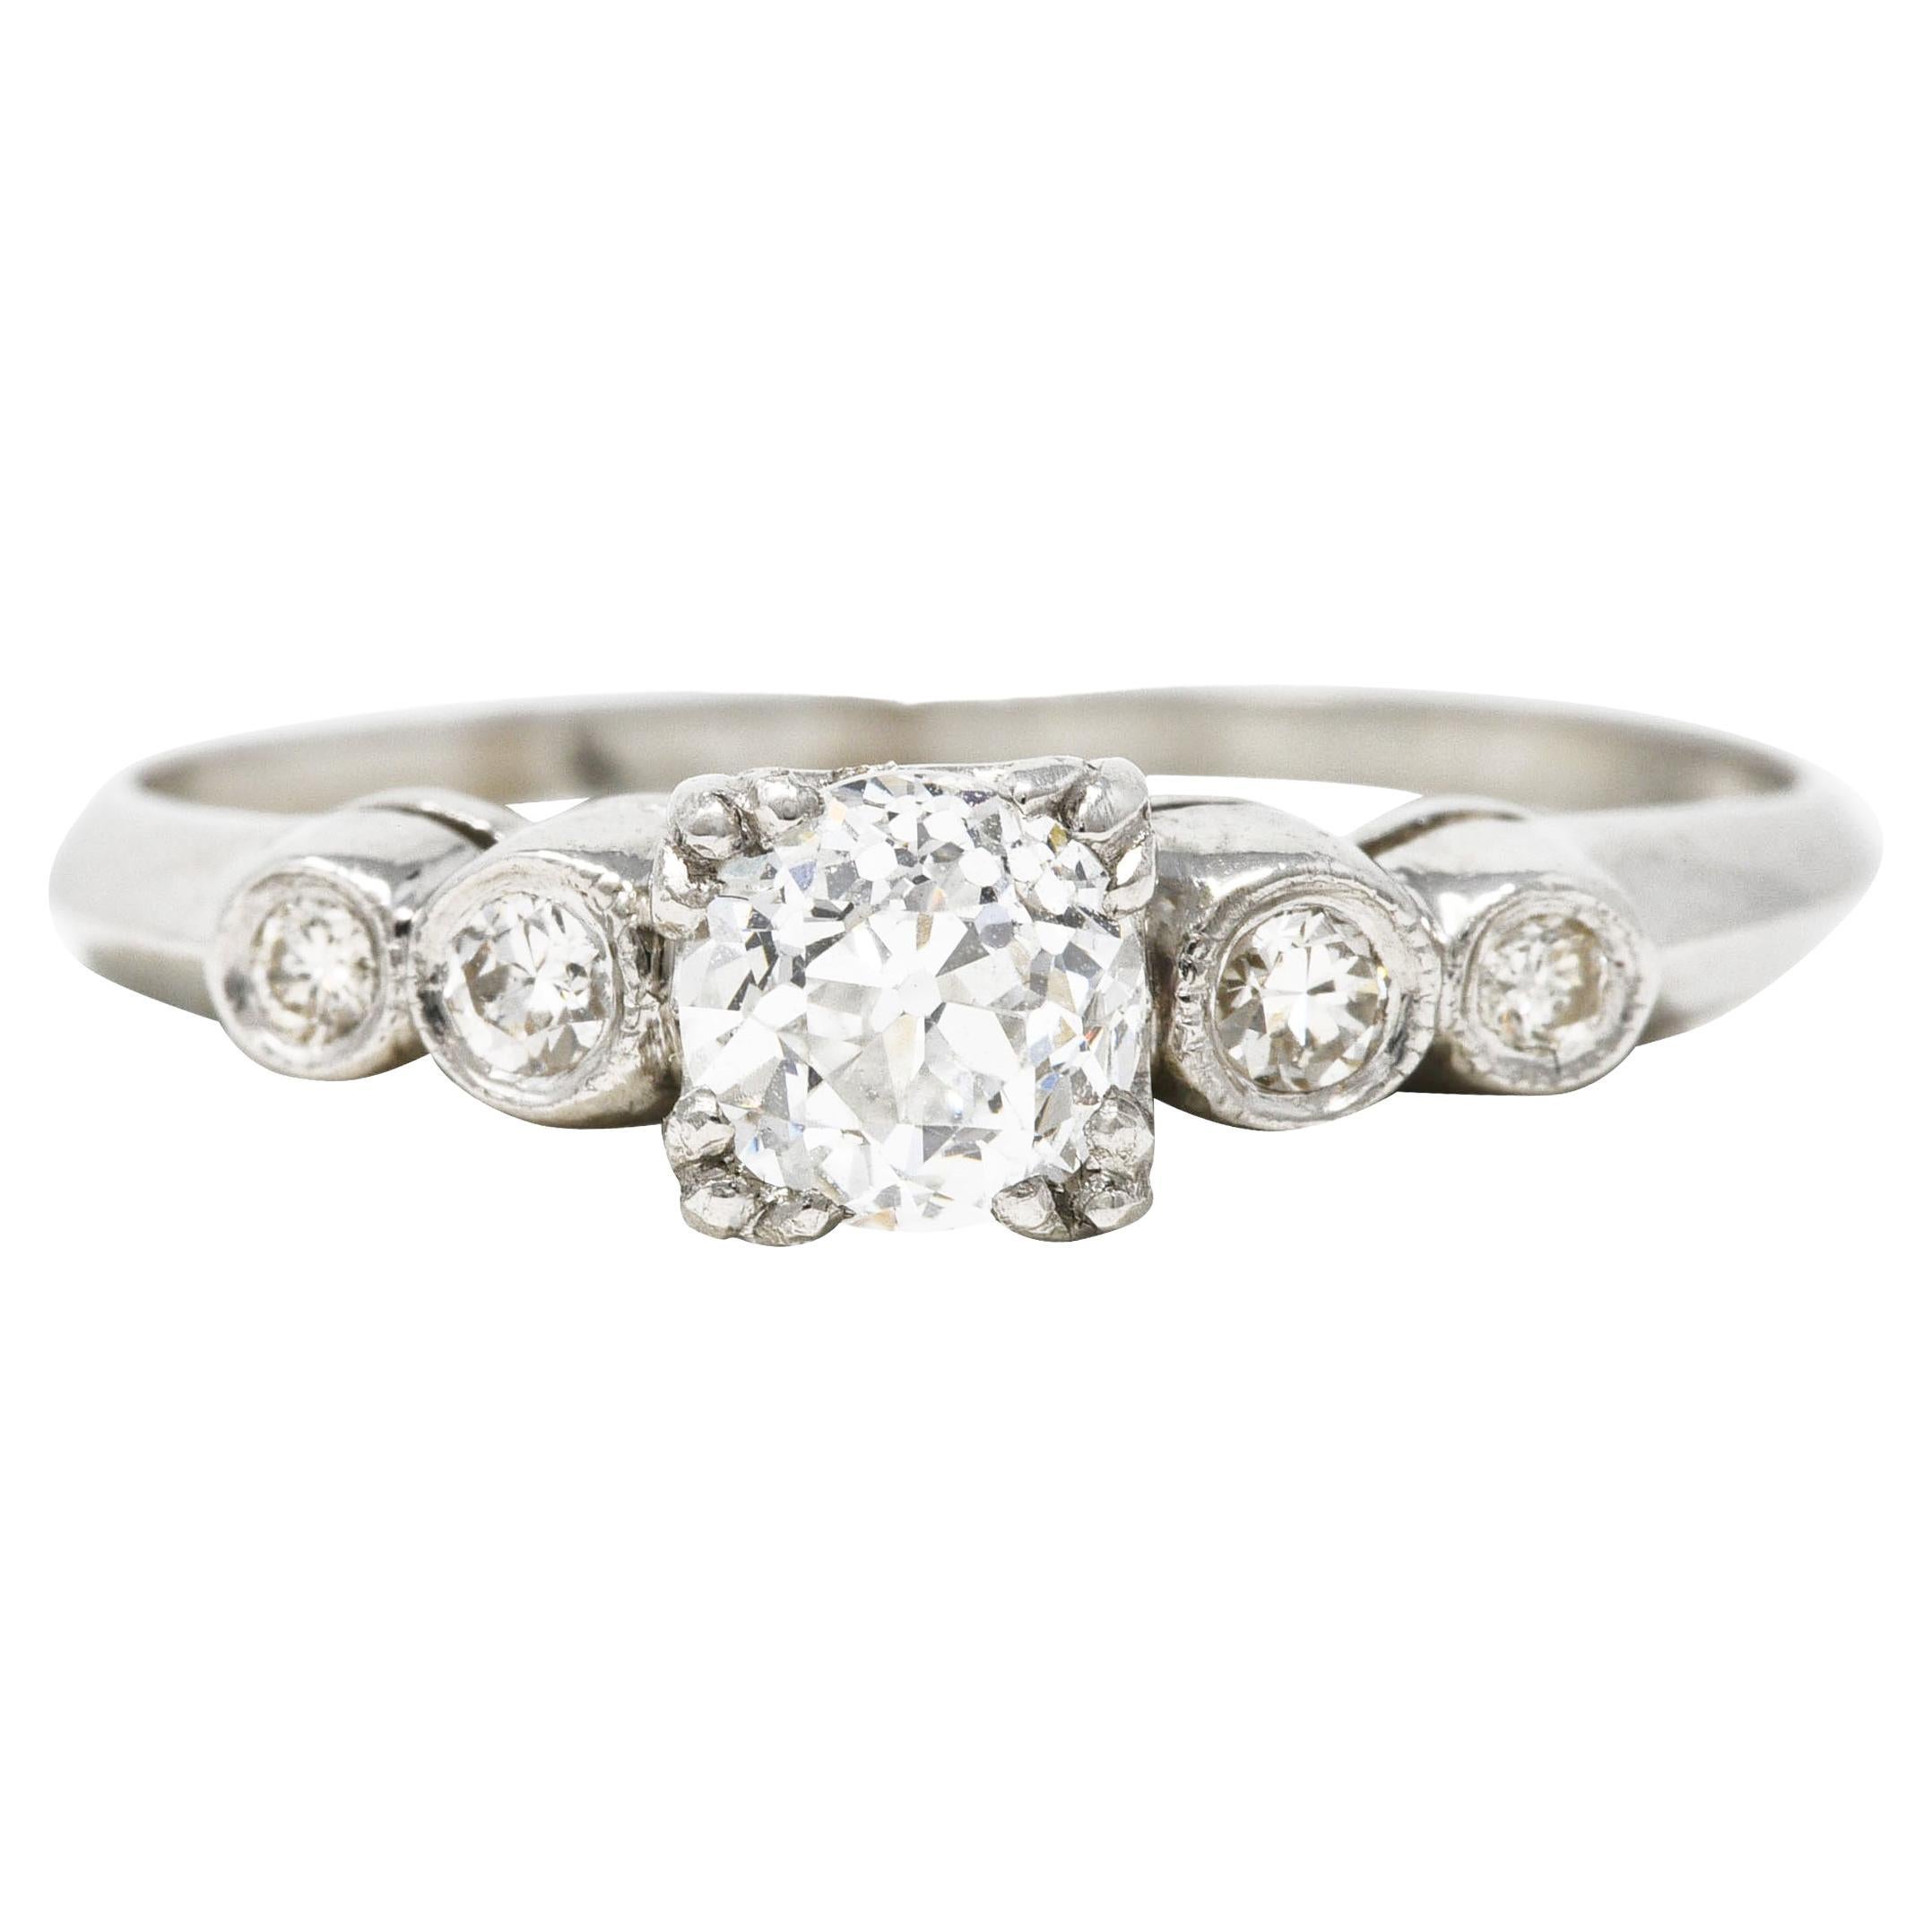 1930's Art Deco 0.64 Carats Diamond Platinum Five Stone Engagement Ring GIA